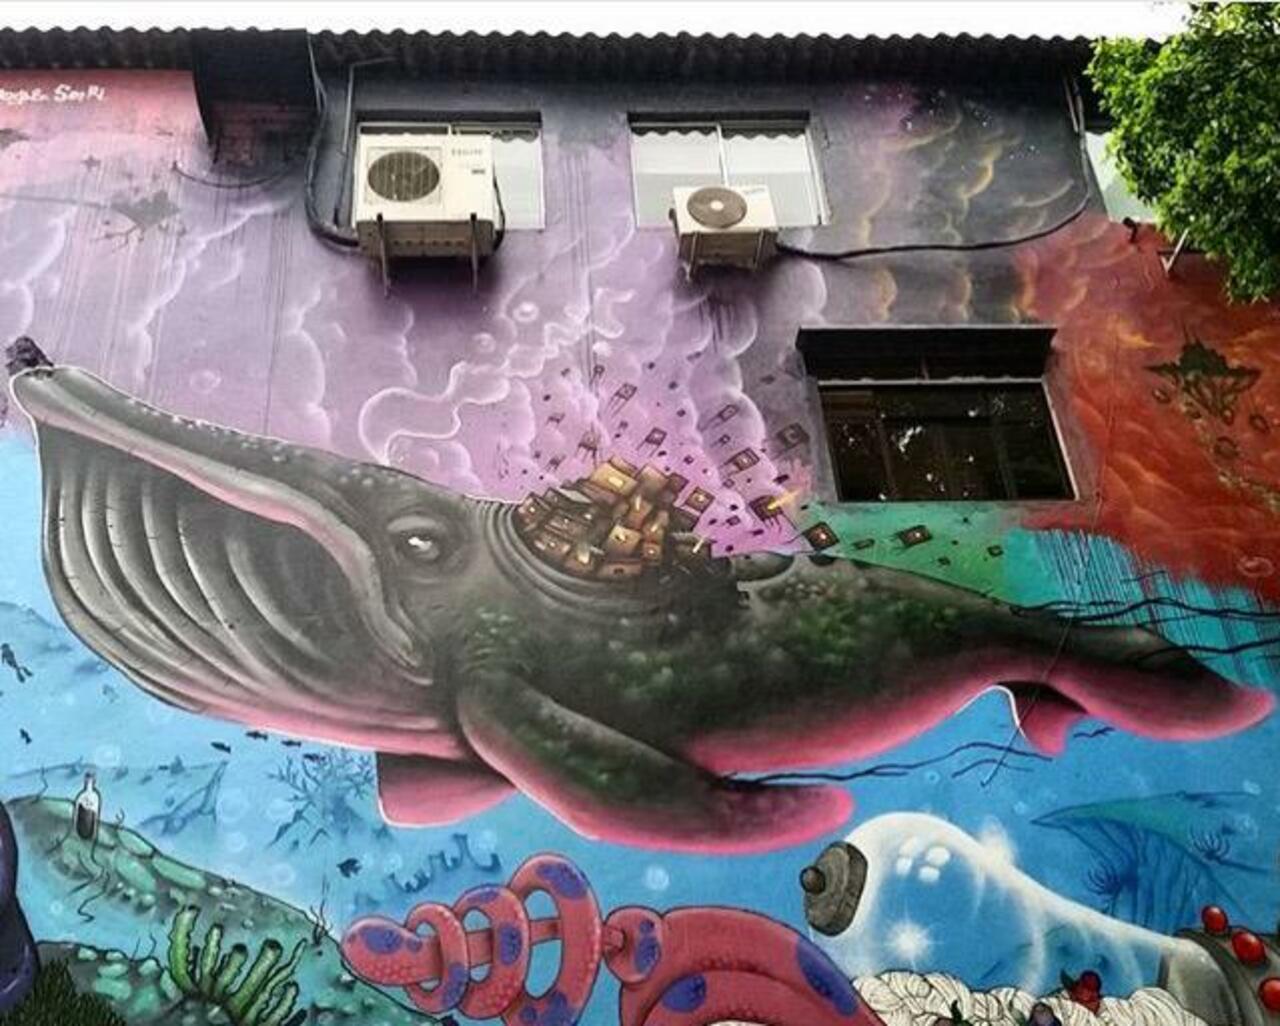 Street Art by joks_johnes Pinheiros, São Paulo 

#art #mural #graffiti #streetart http://t.co/nalQ8wkgL4